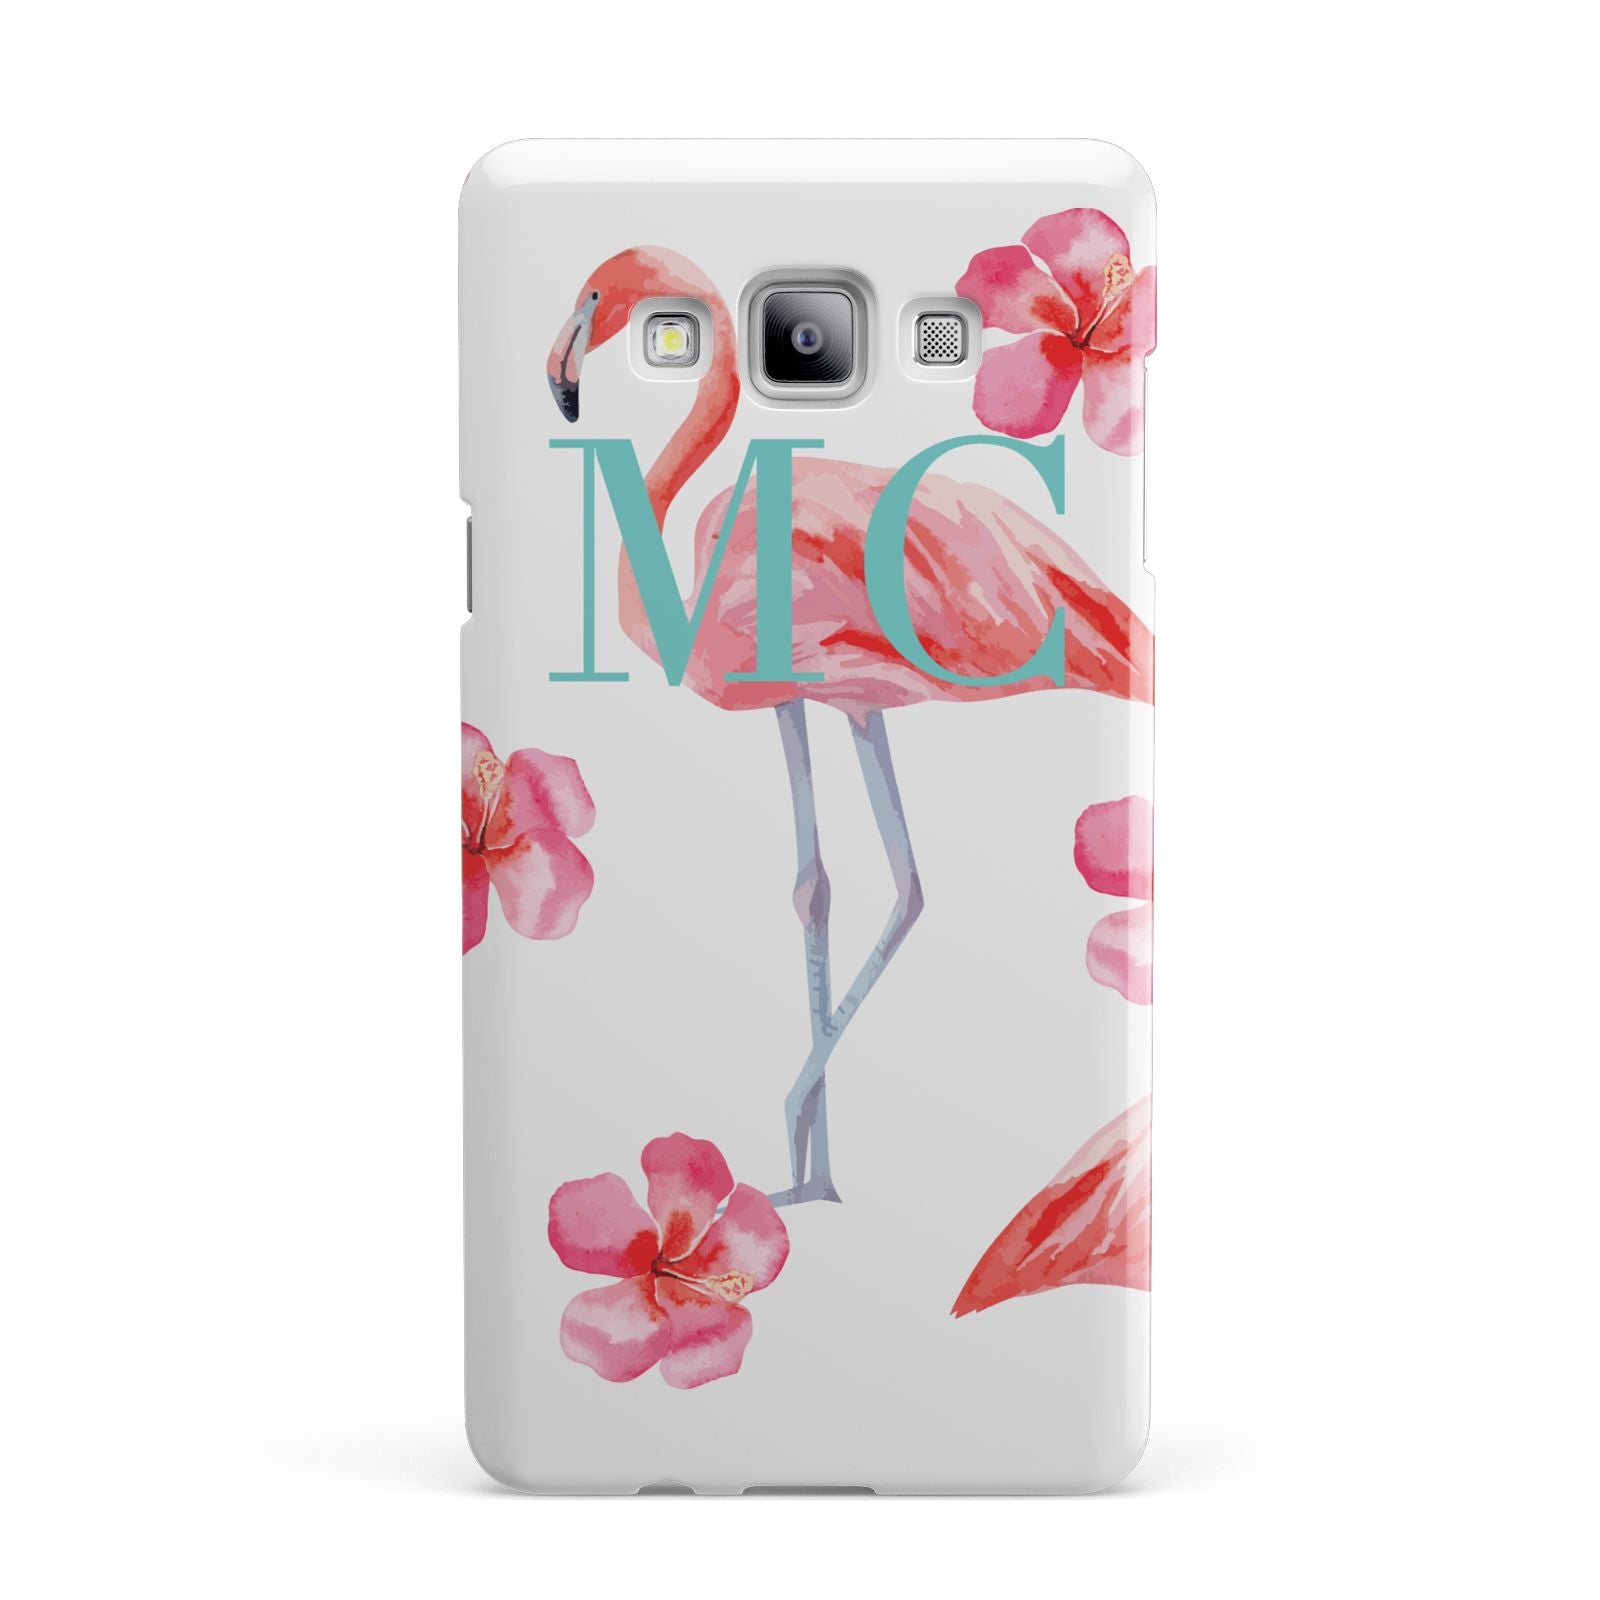 Personalised Initials Flamingo 3 Samsung Galaxy A7 2015 Case